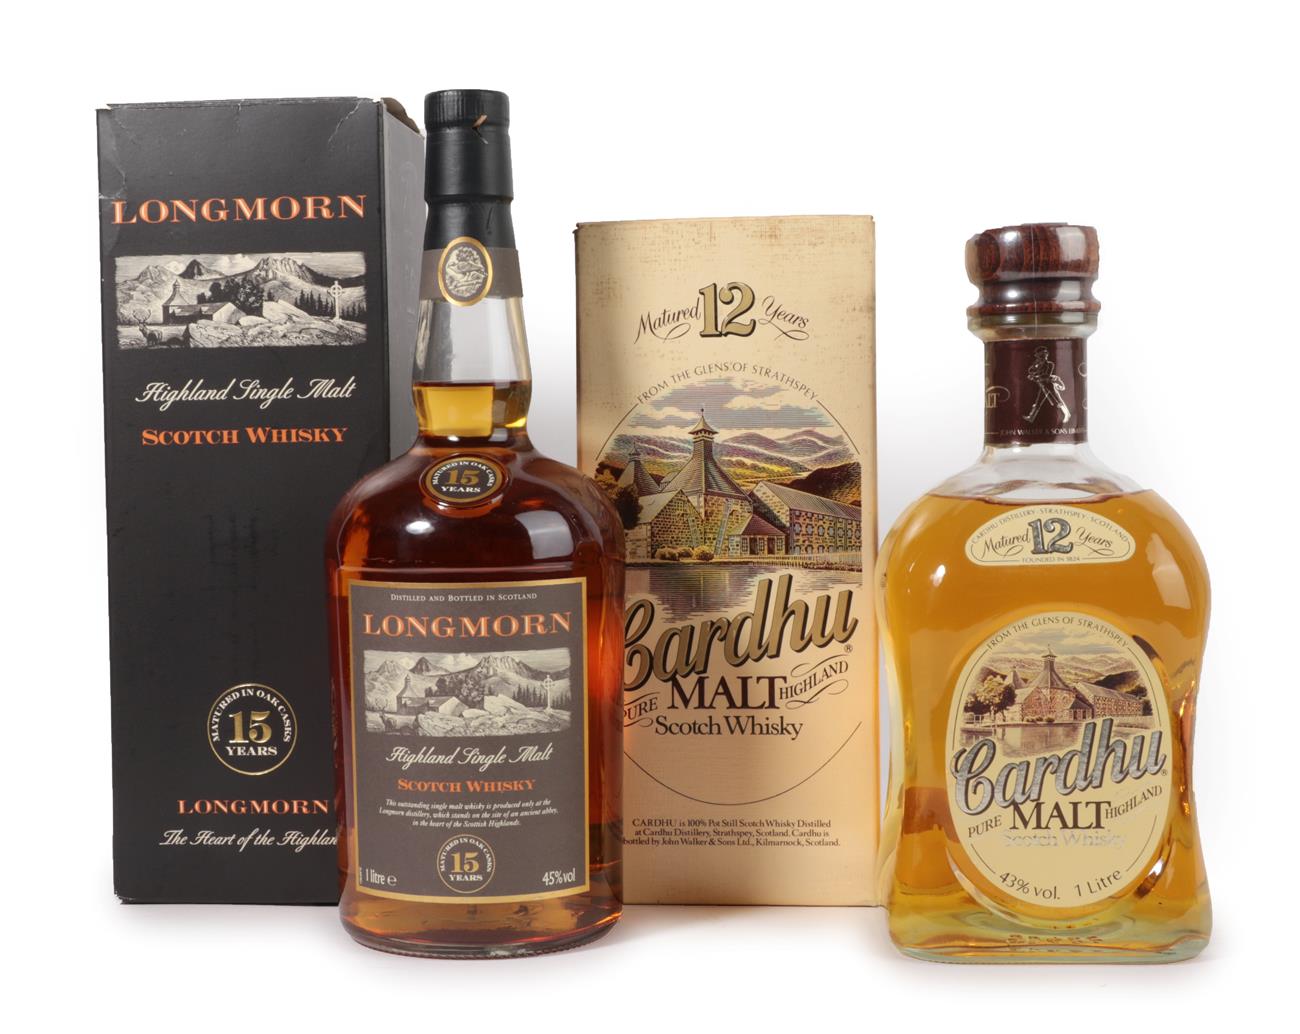 Cardhu 12 Year Old Pure Highland Malt Scotch Whisky, 1970s bottling, 40% 75cl,